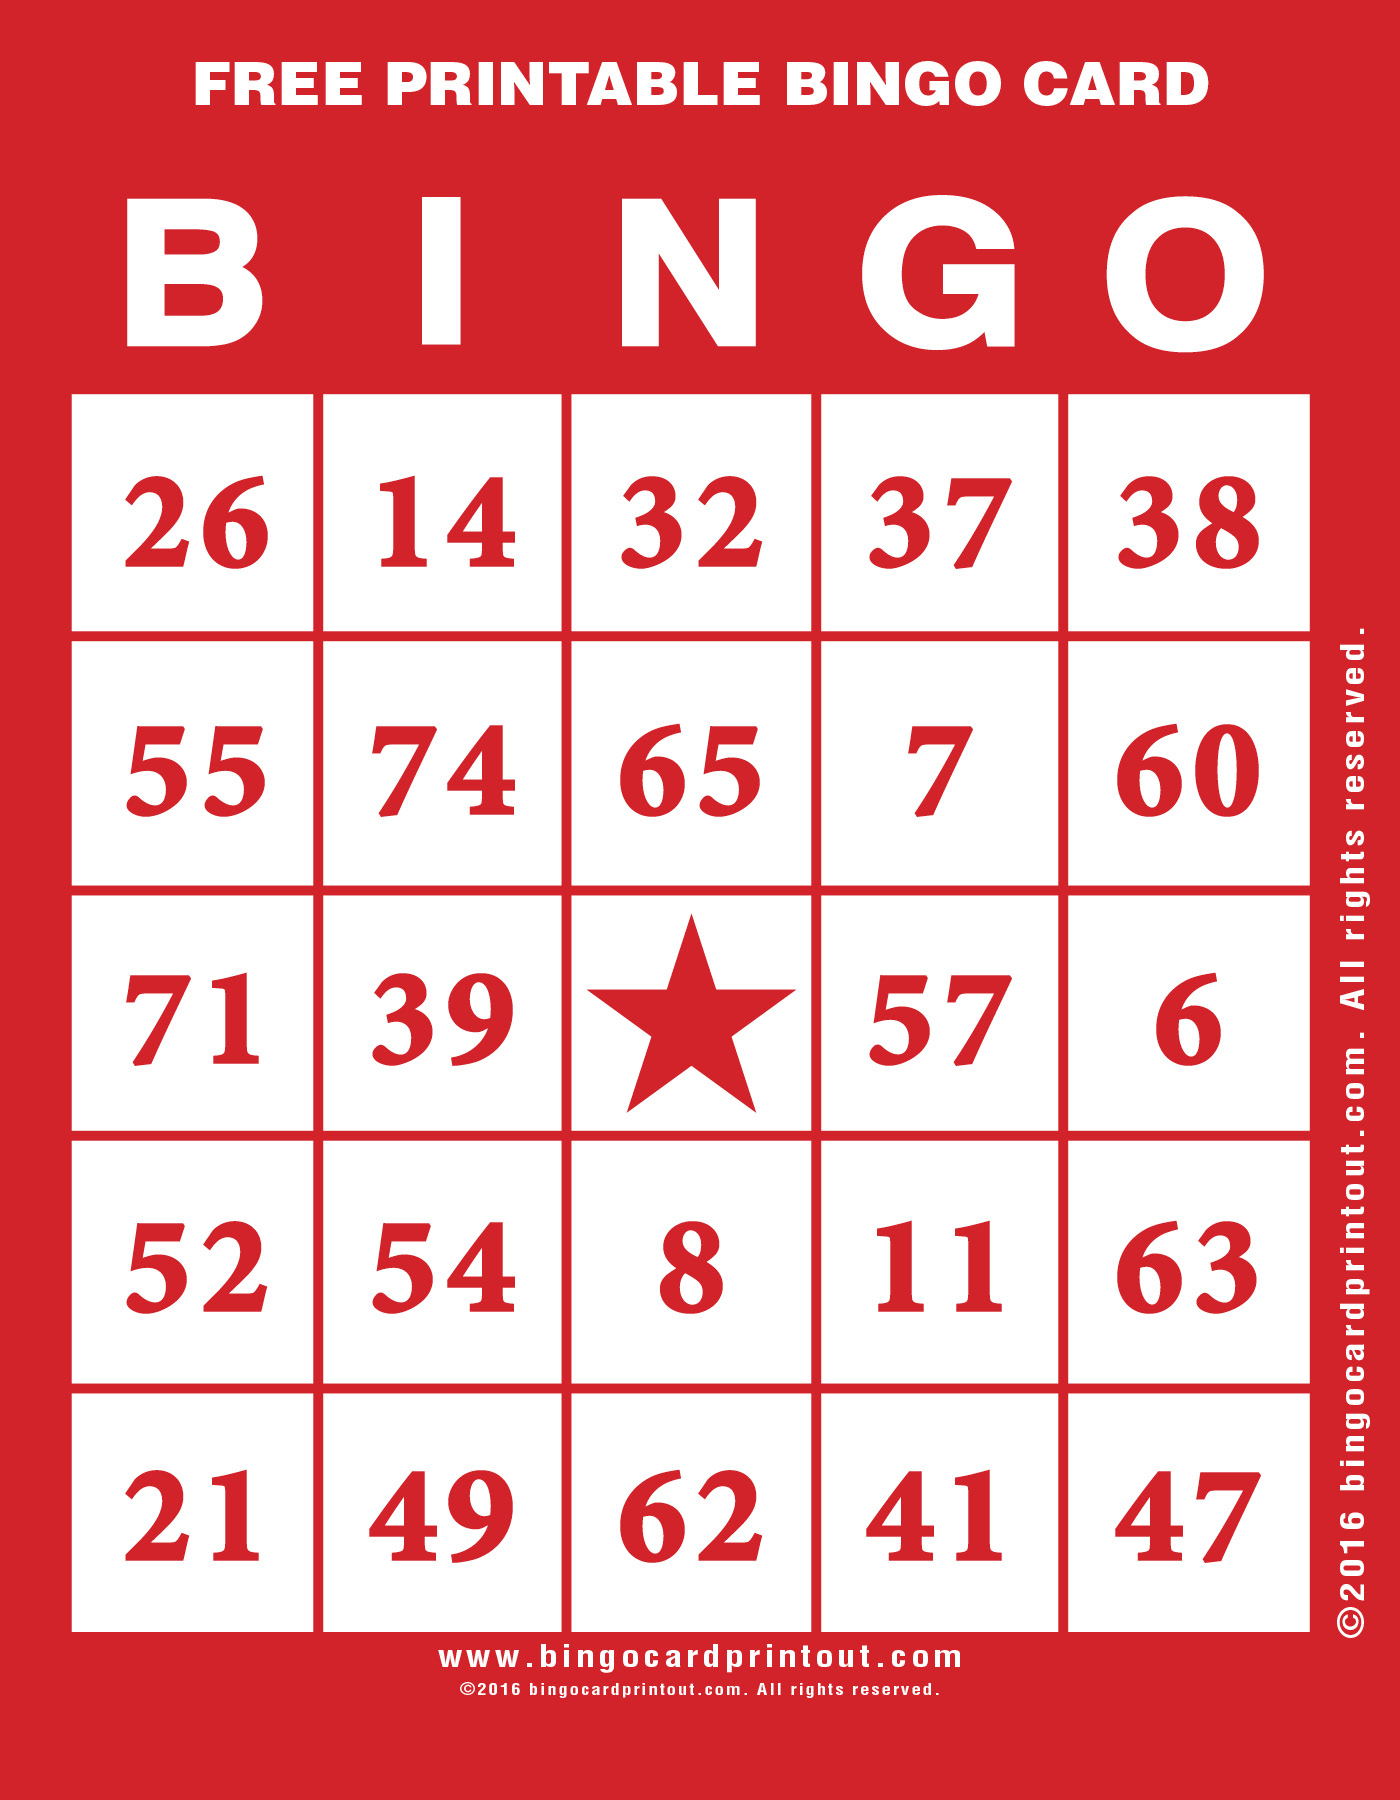 Free Printable Bingo Card - Bingocardprintout - Free Printable Bingo